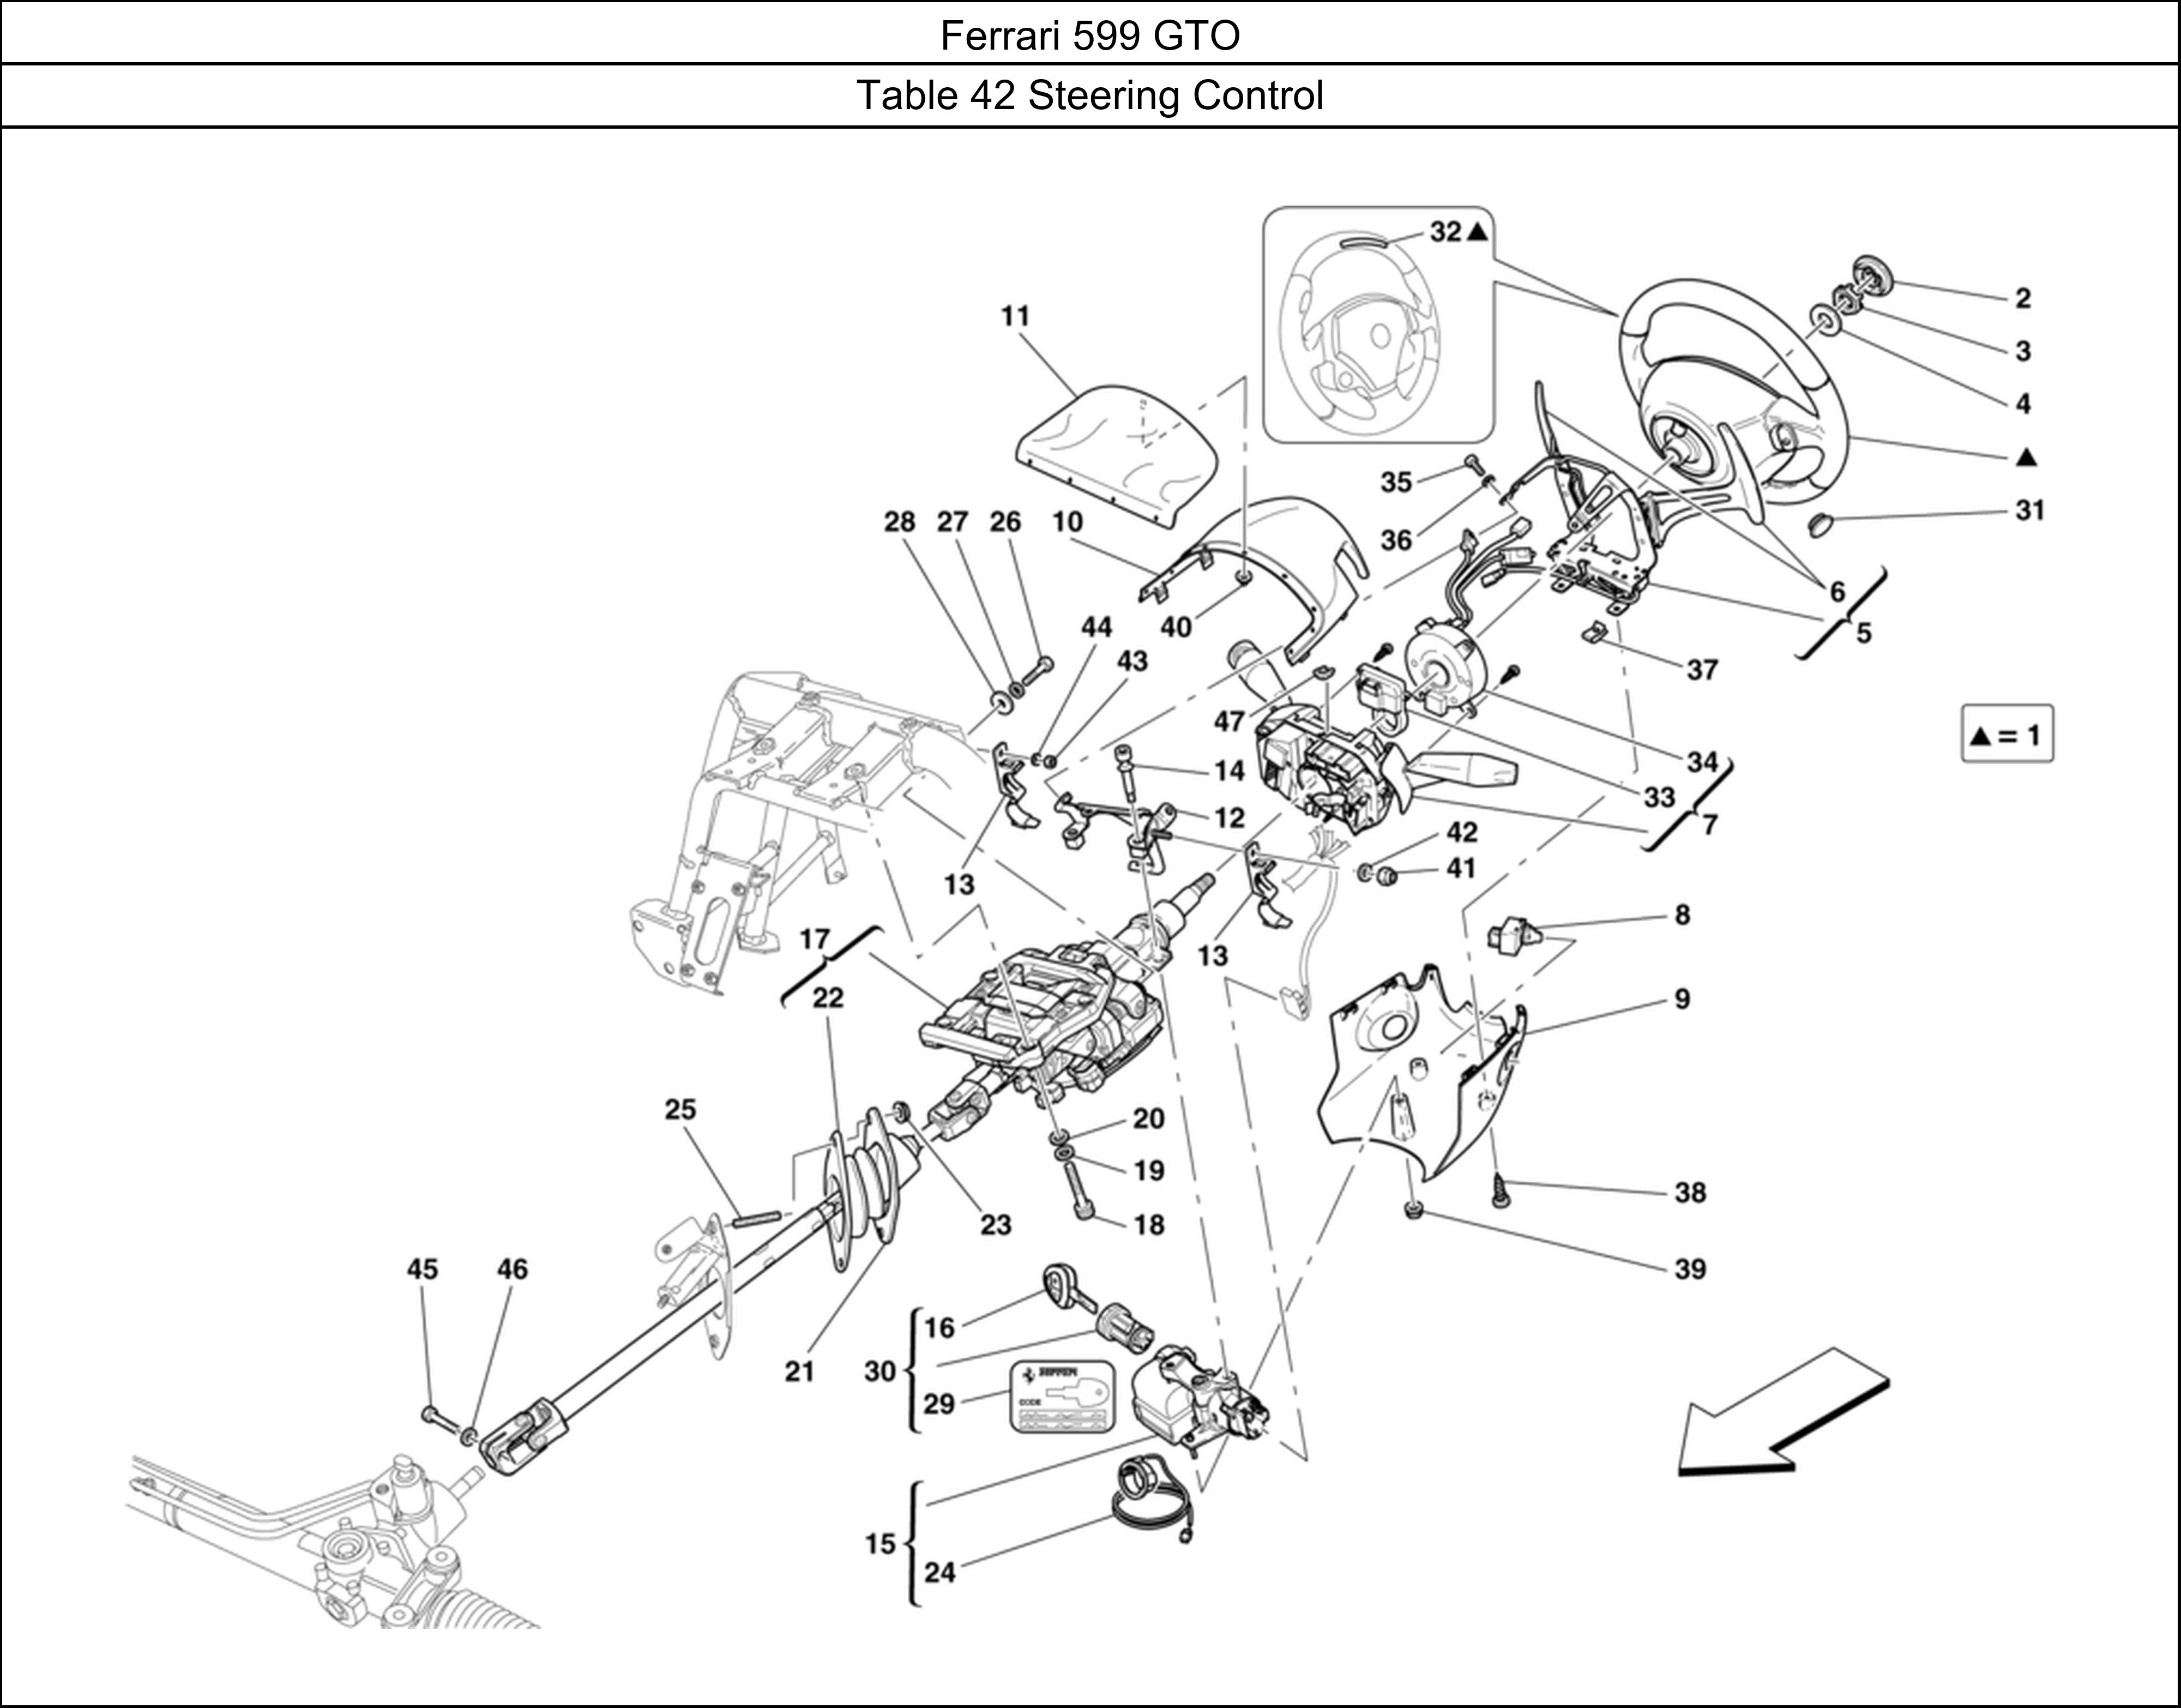 Ferrari Parts Ferrari 599 GTO Table 42 Steering Control